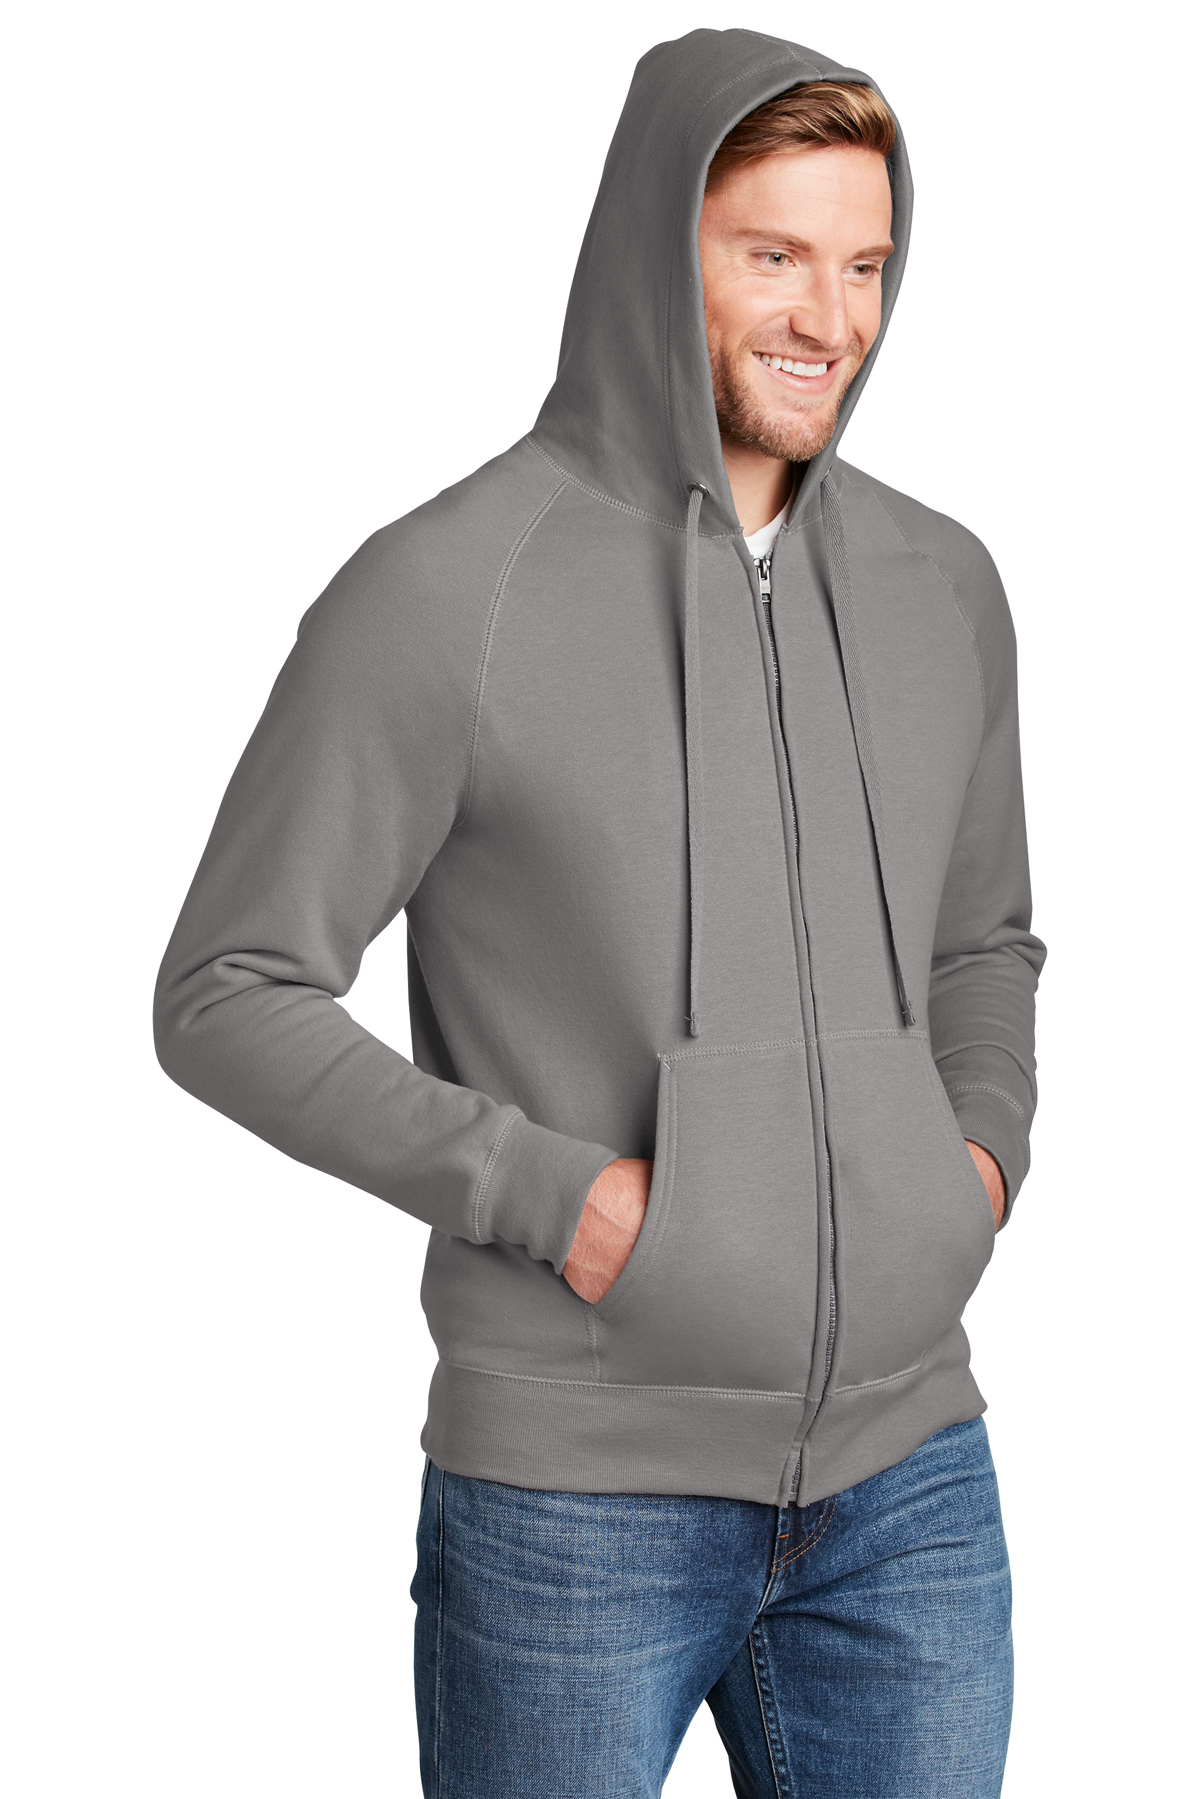 Hanes Nano Full-Zip Hooded Sweatshirt | Product | SanMar